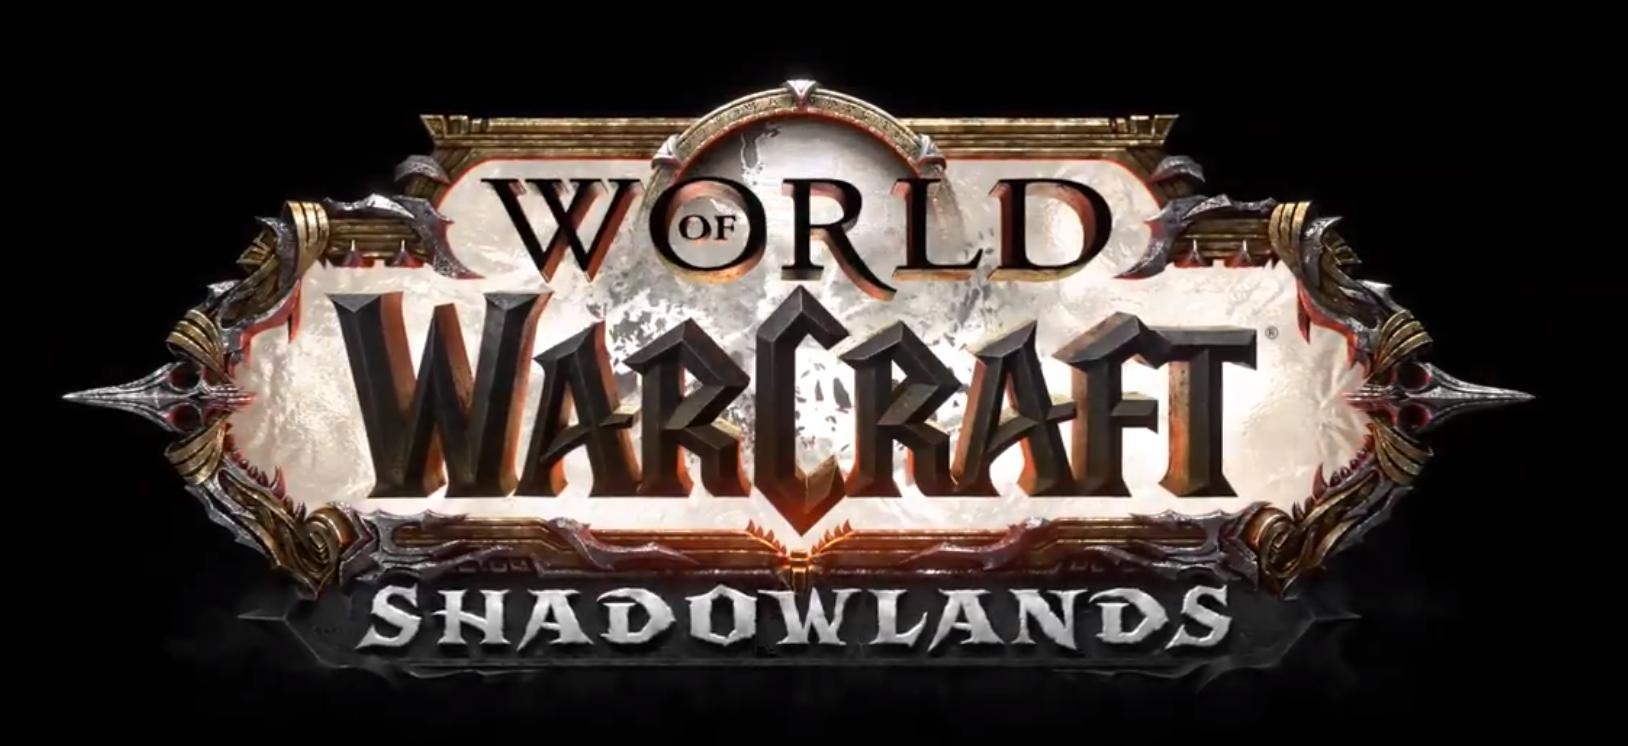 'World of Warcraft: Shadowlands' release delayed